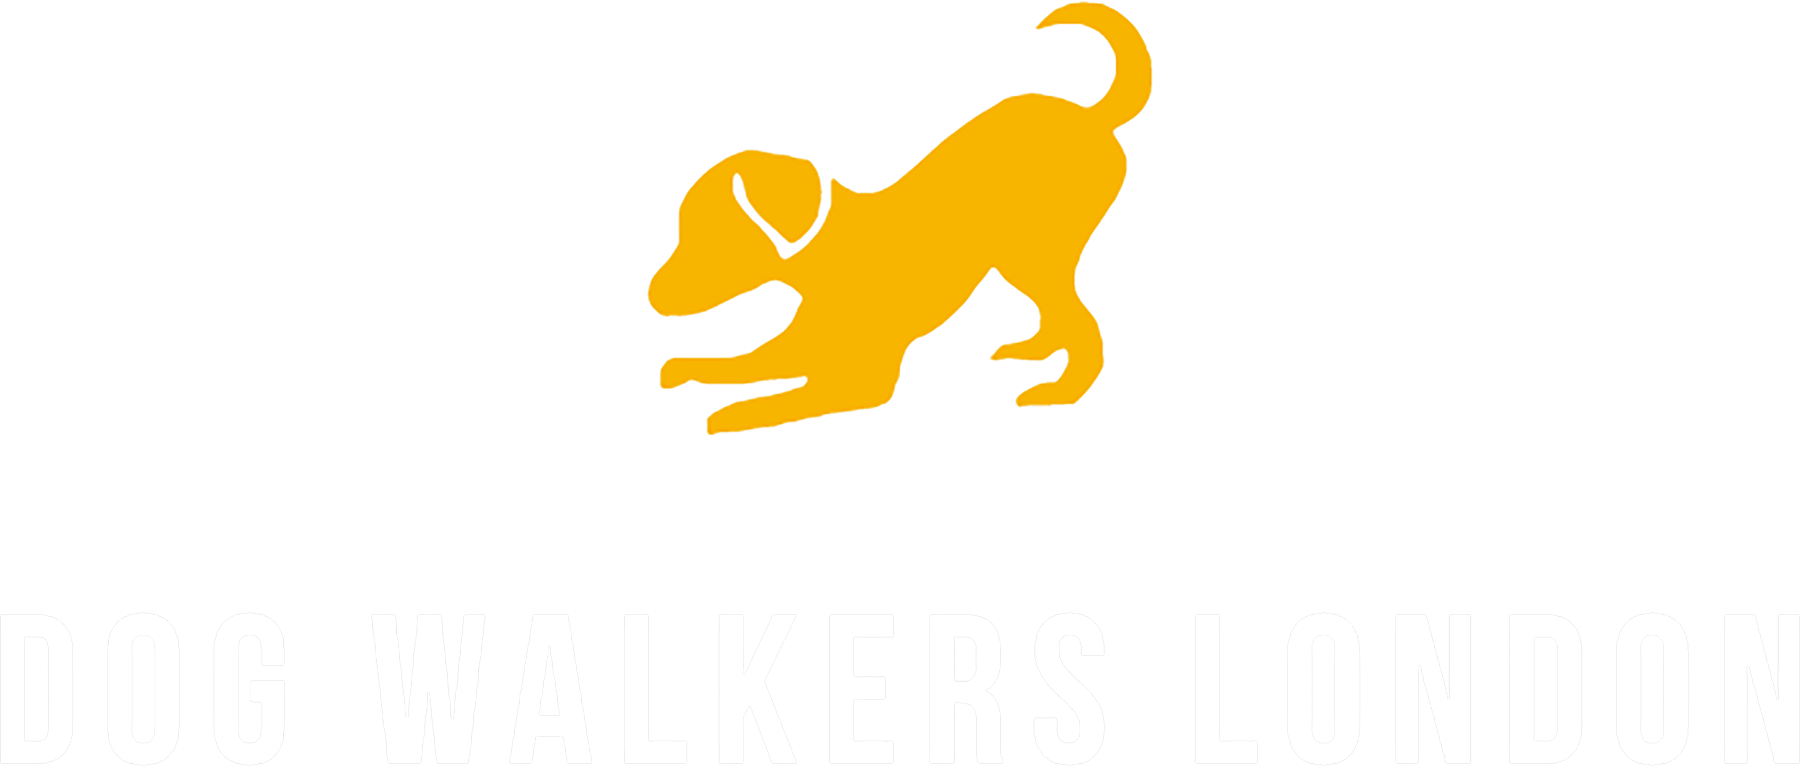 Dog Walkers London white logo